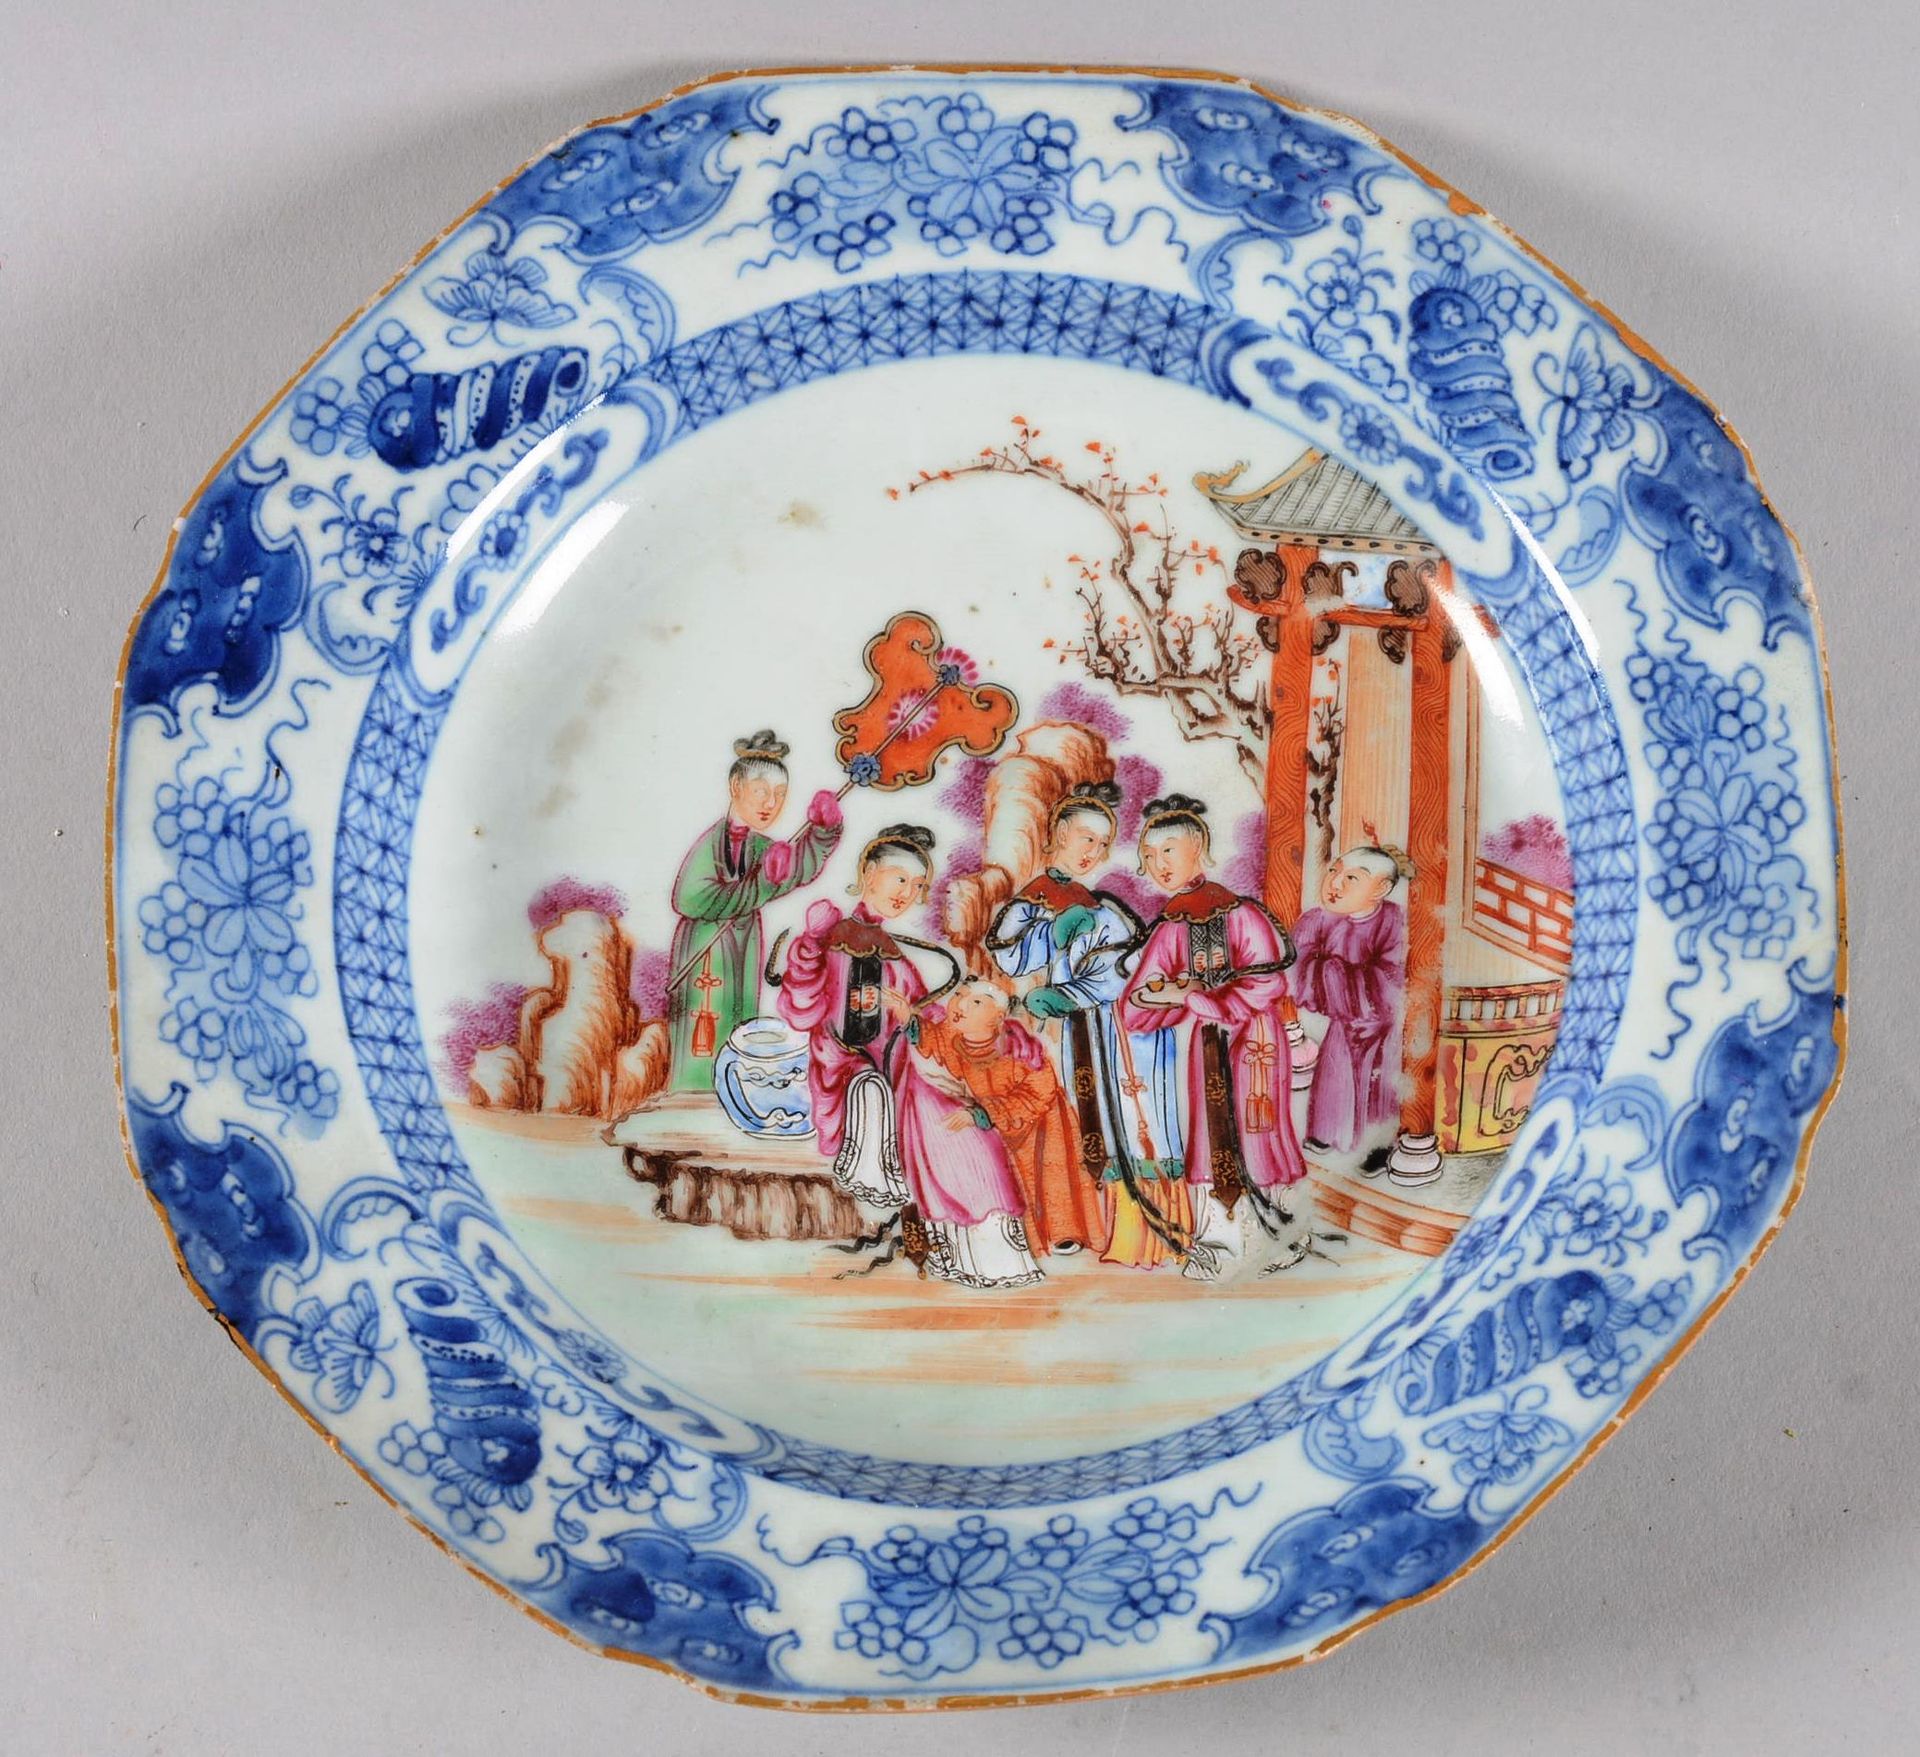 Assiette creuse octogonale 中国。

中国瓷器八角形汤盘，饰有露台上的人物。18世纪末

直径：22厘米